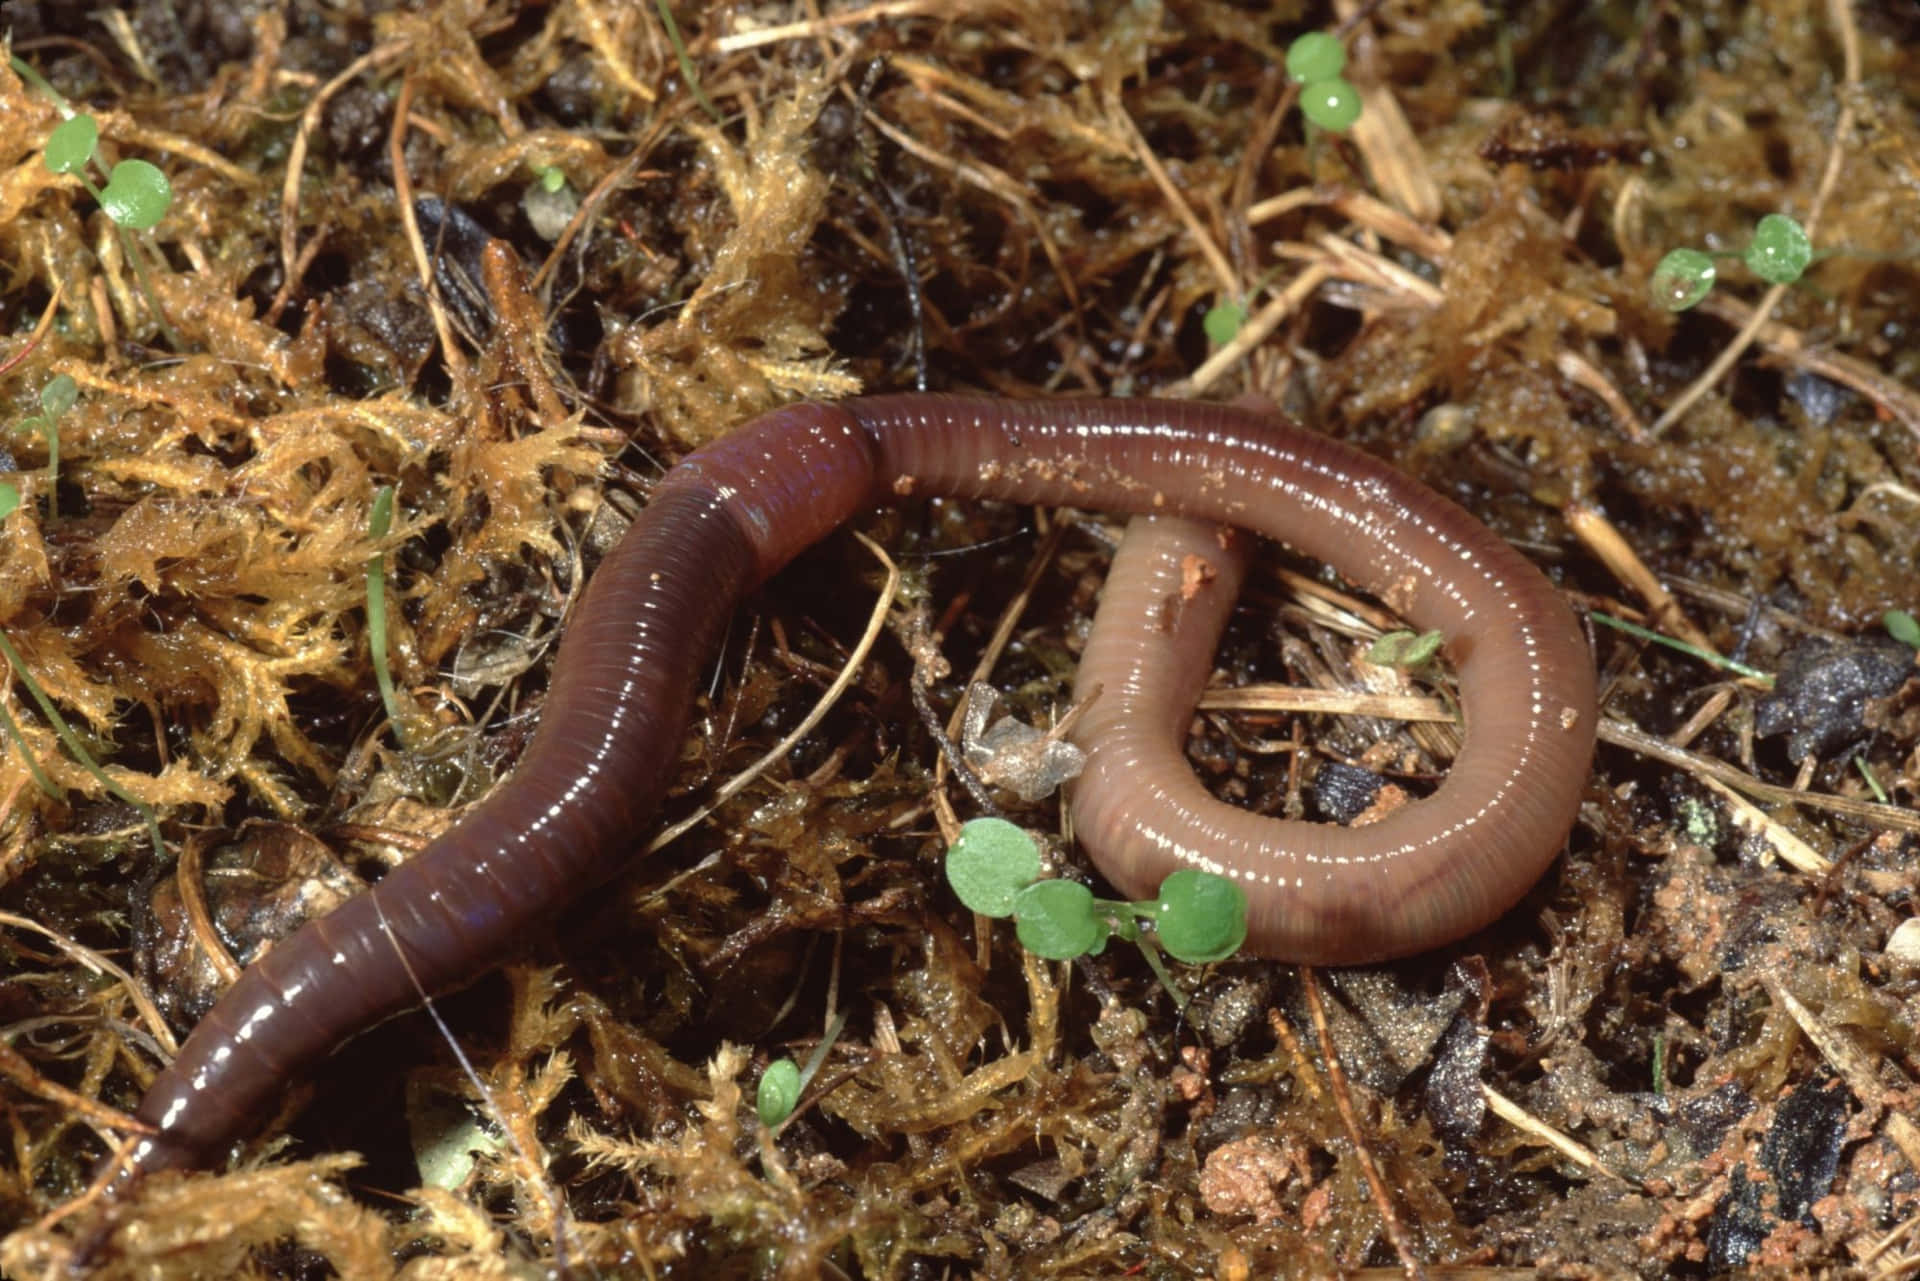 Earthwormin Natural Habitat.jpg Wallpaper